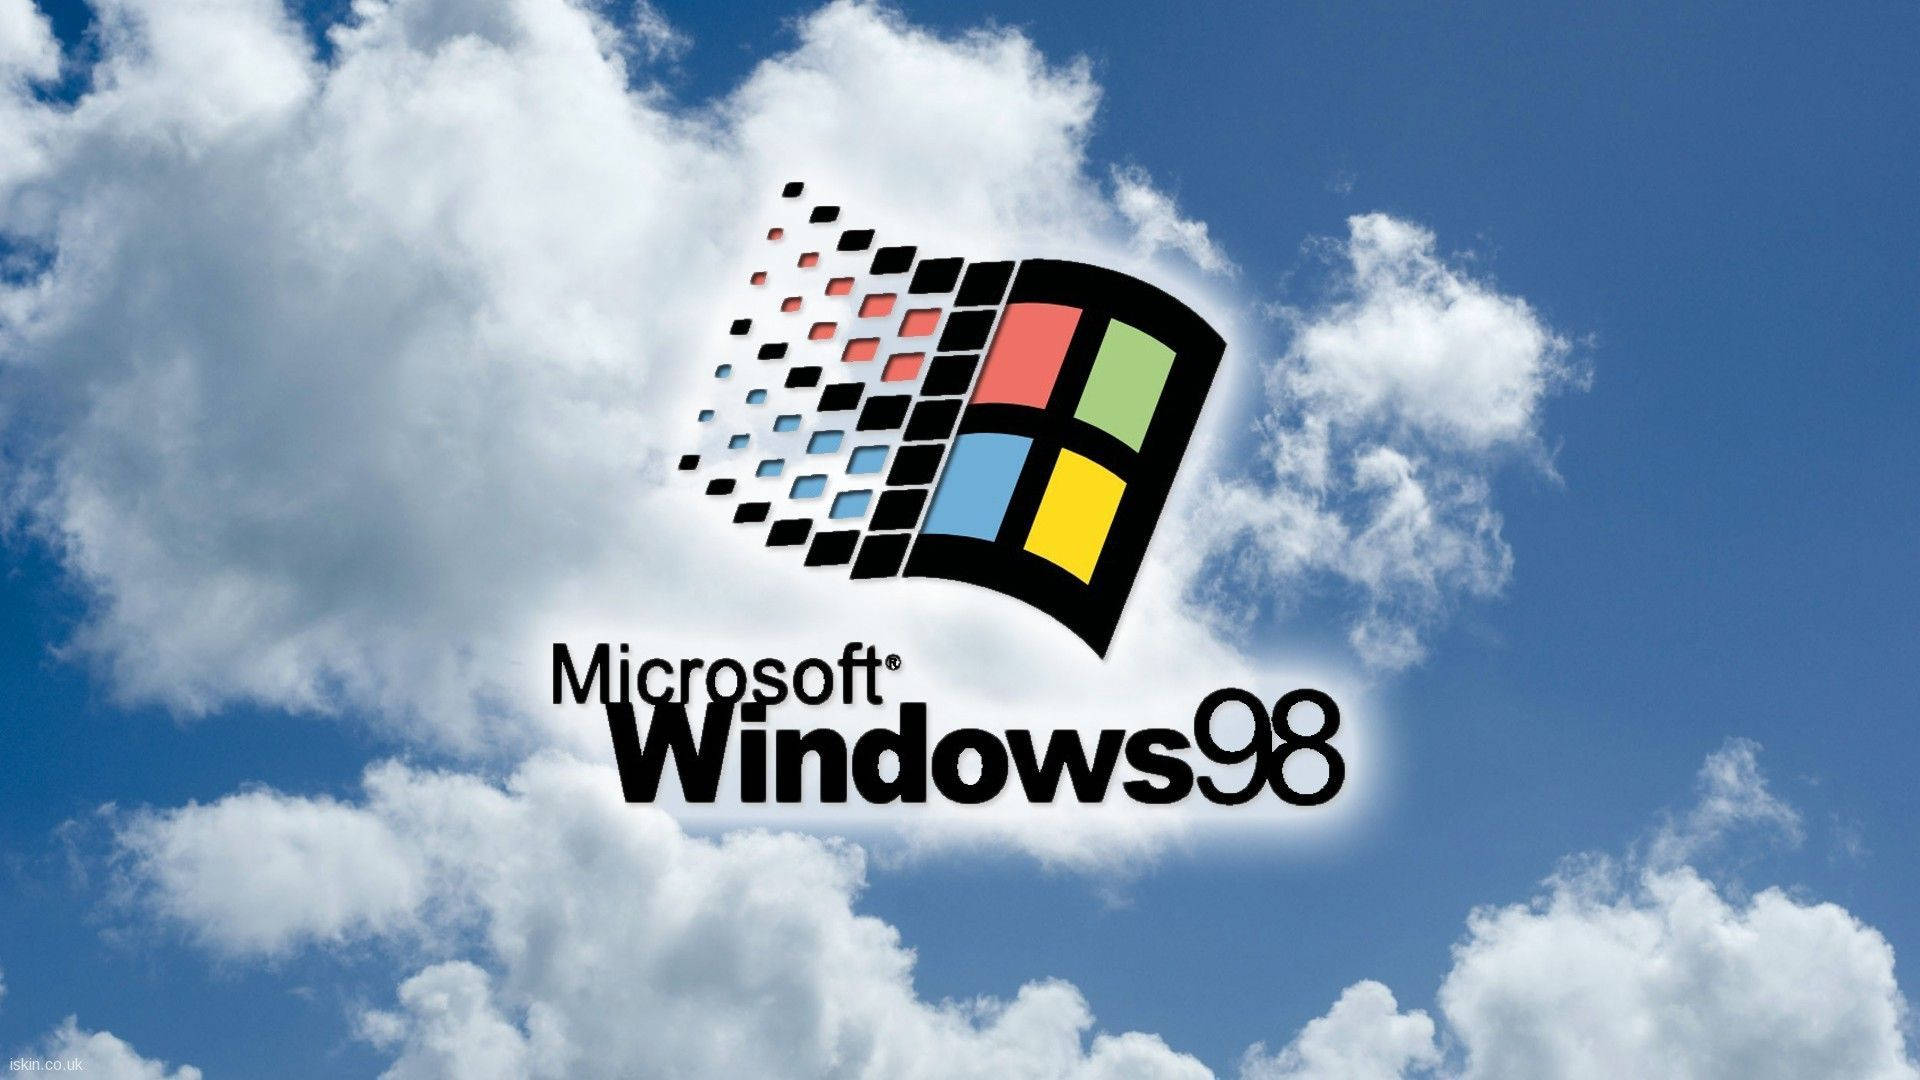 Windows 98 Background Wallpaper